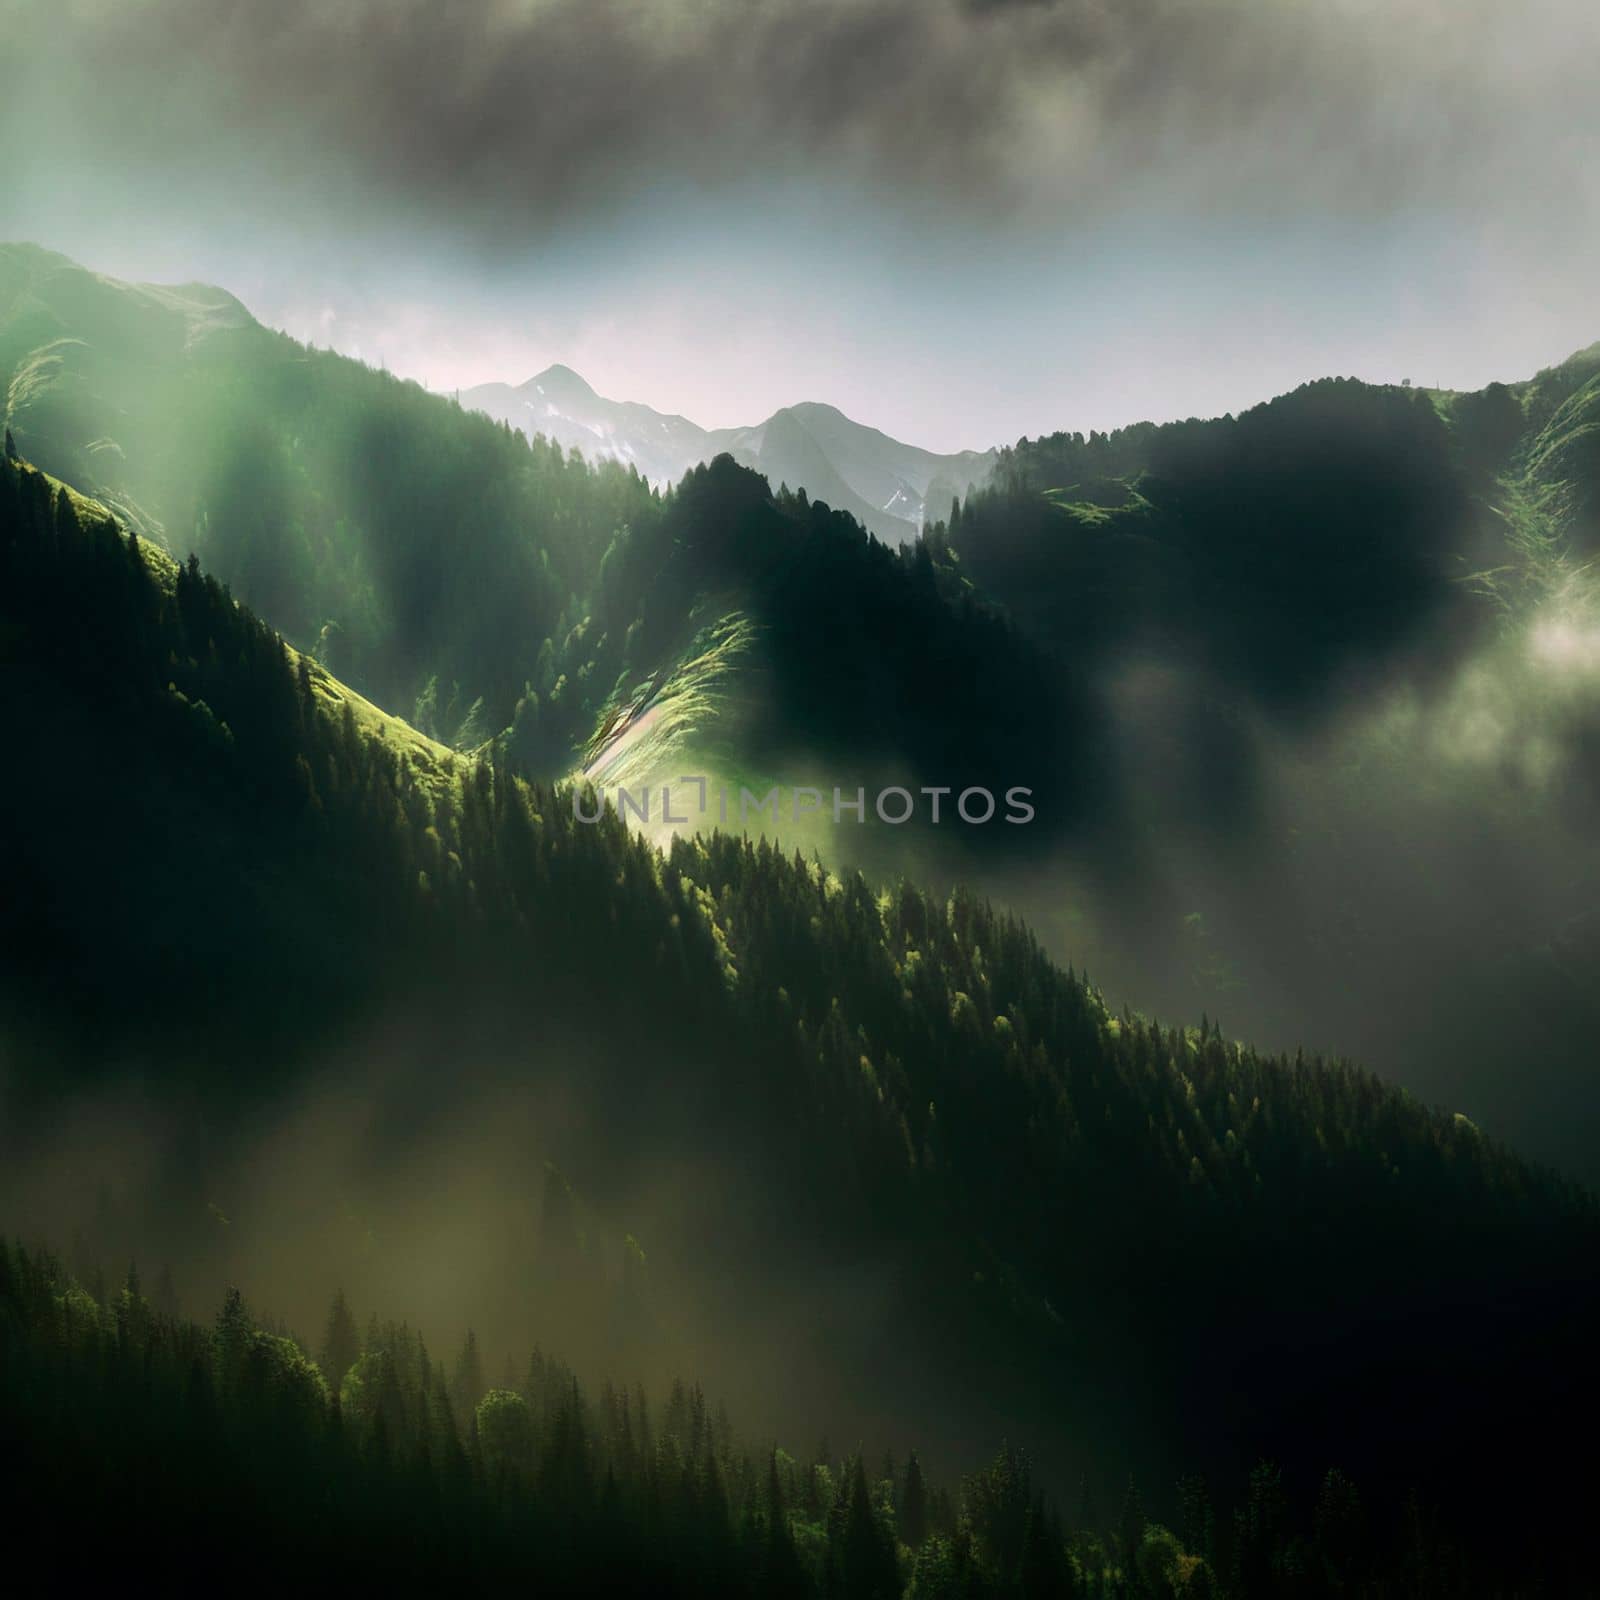 Green mountain range. Landscape of misty mountains by NeuroSky